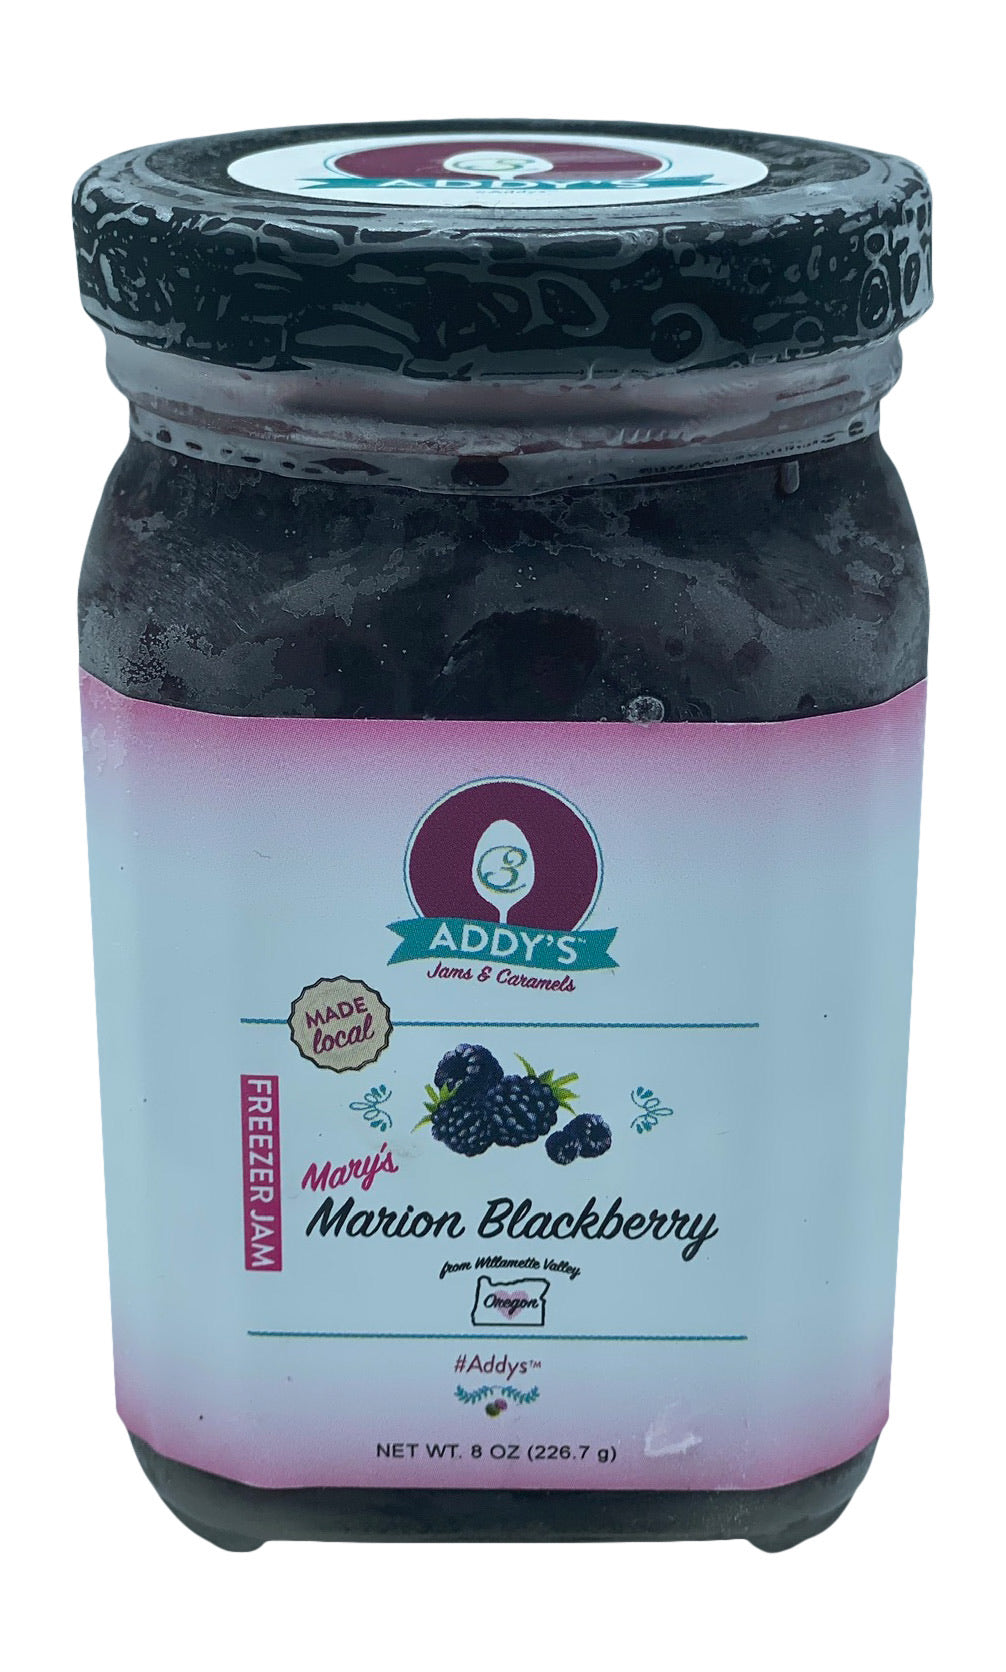 Addy's Marion Blackberry Freezer Jam